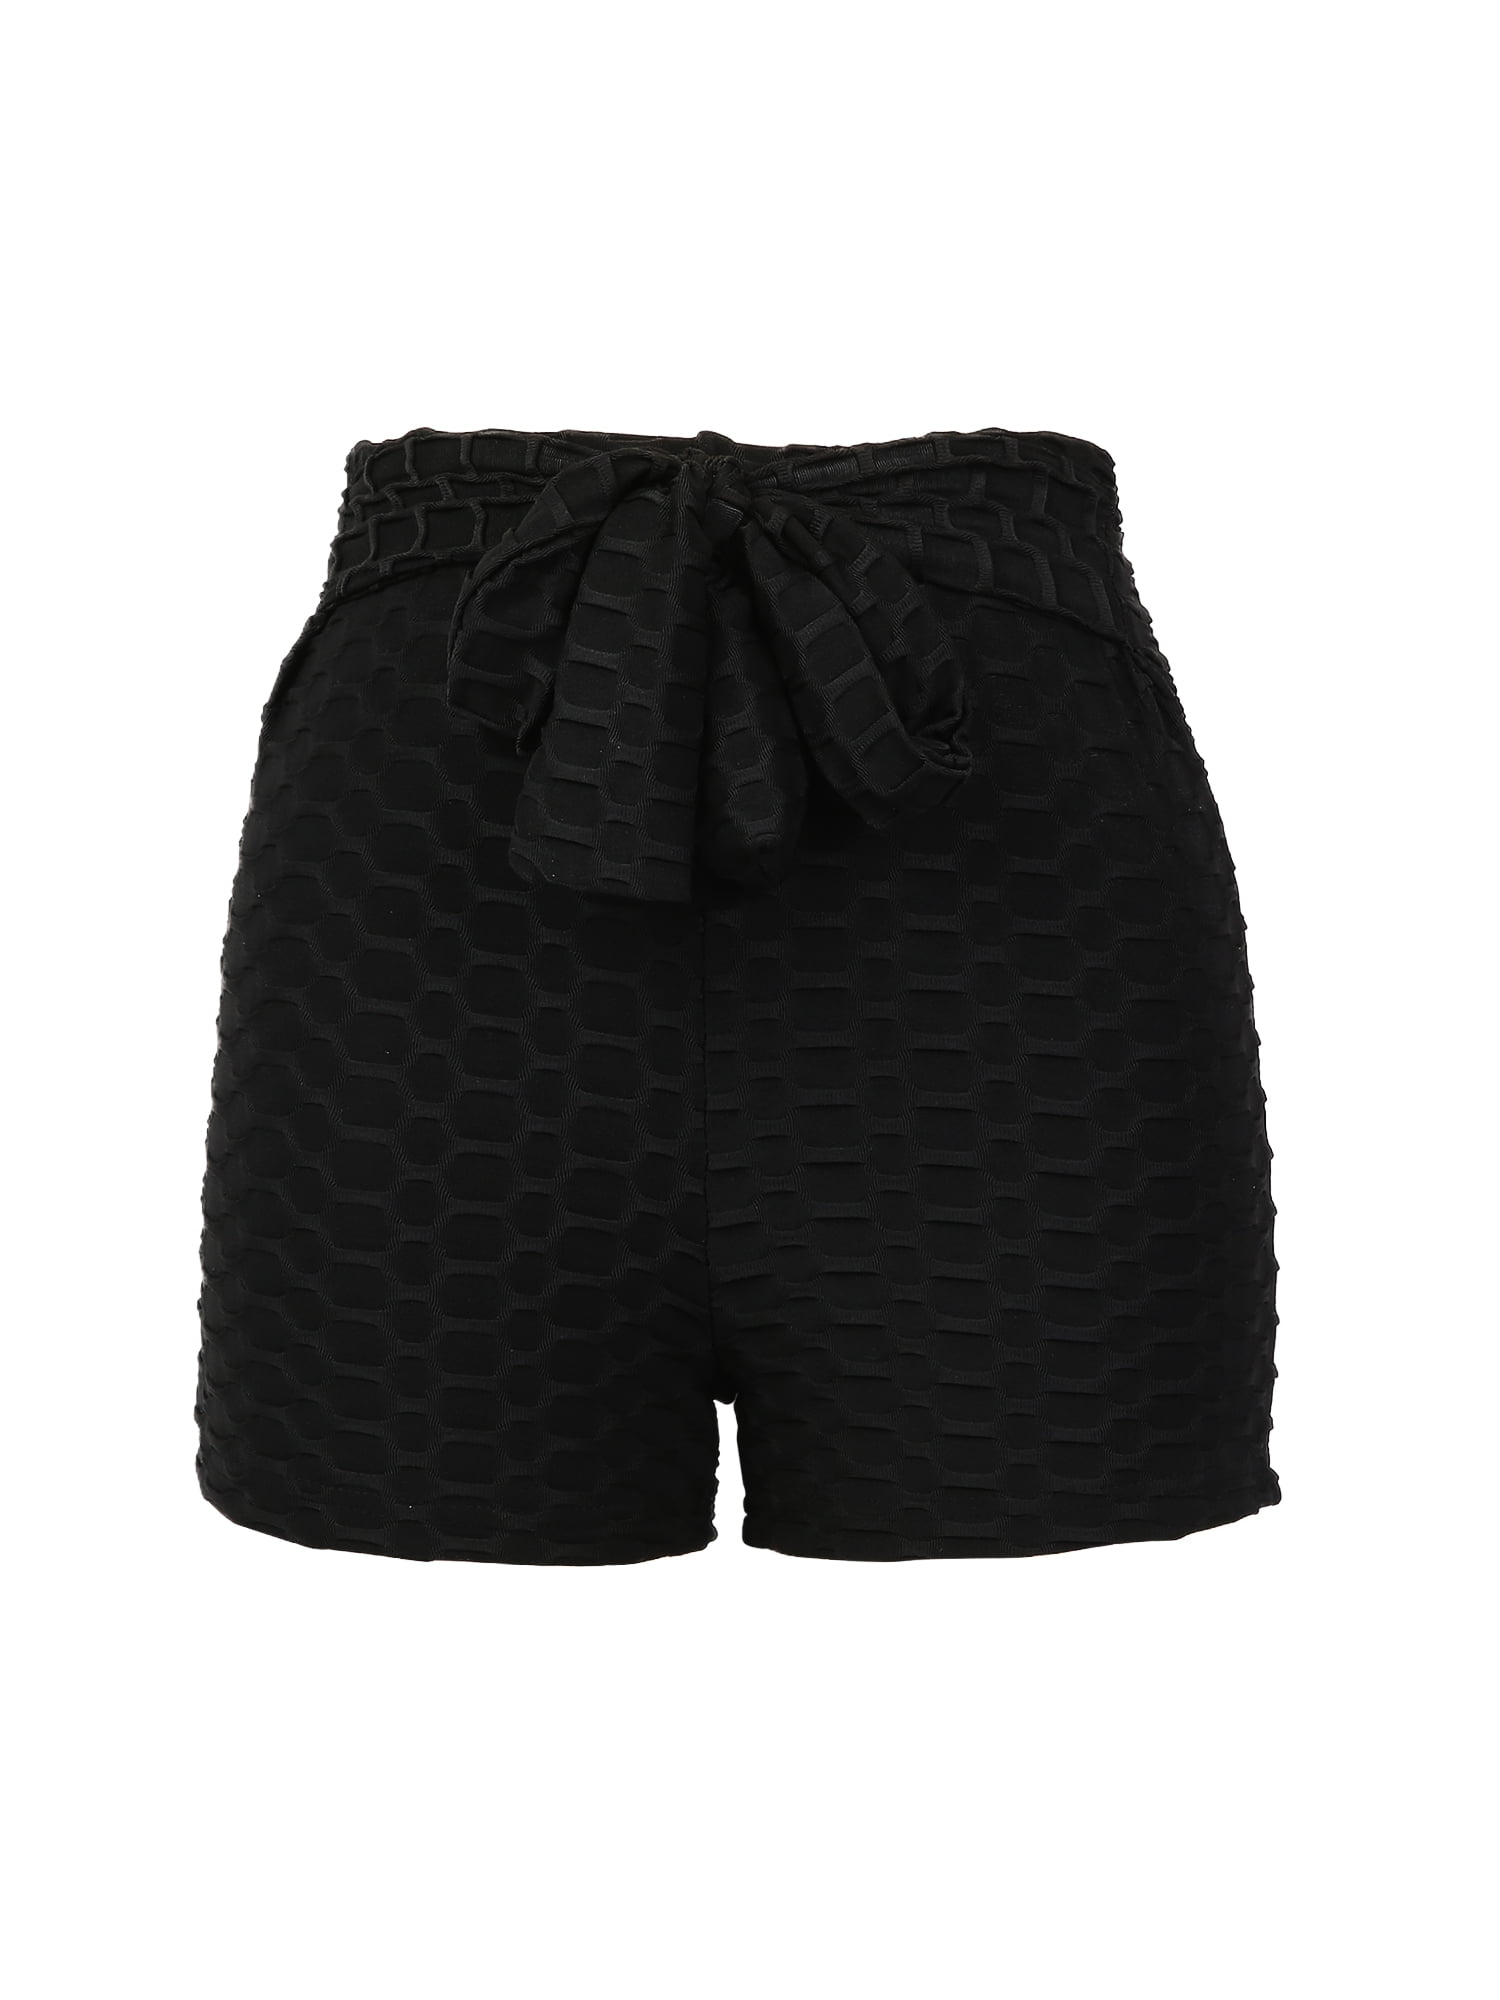 hirigin Women High Waist Sport Shorts, Honeycomb Type Stretchy Short Pants  